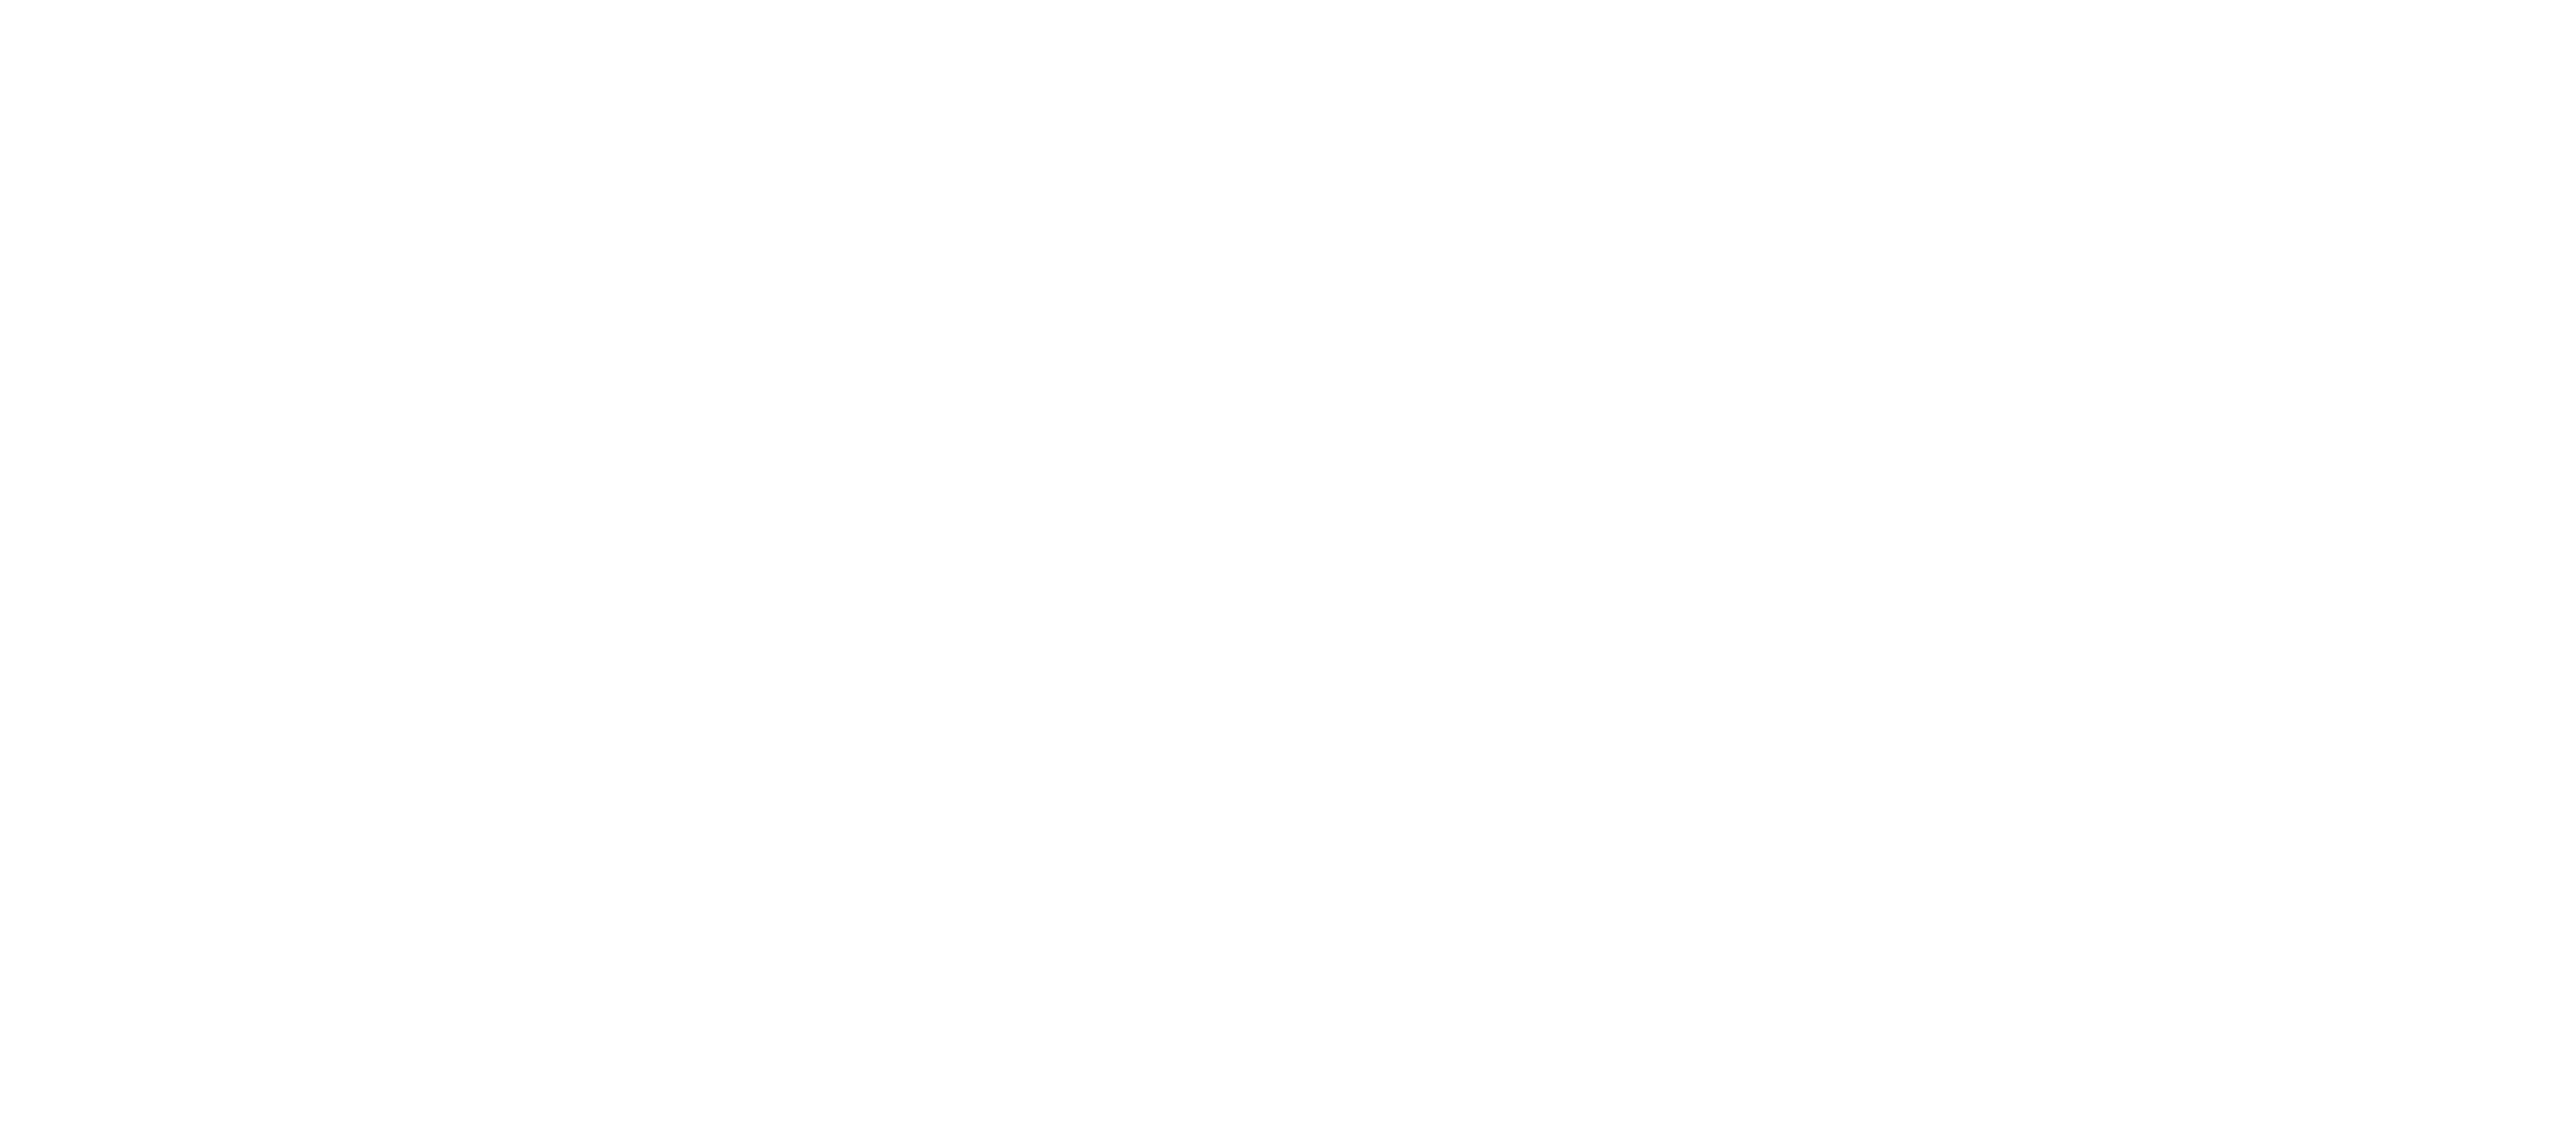 Good Samaritan University Hospital